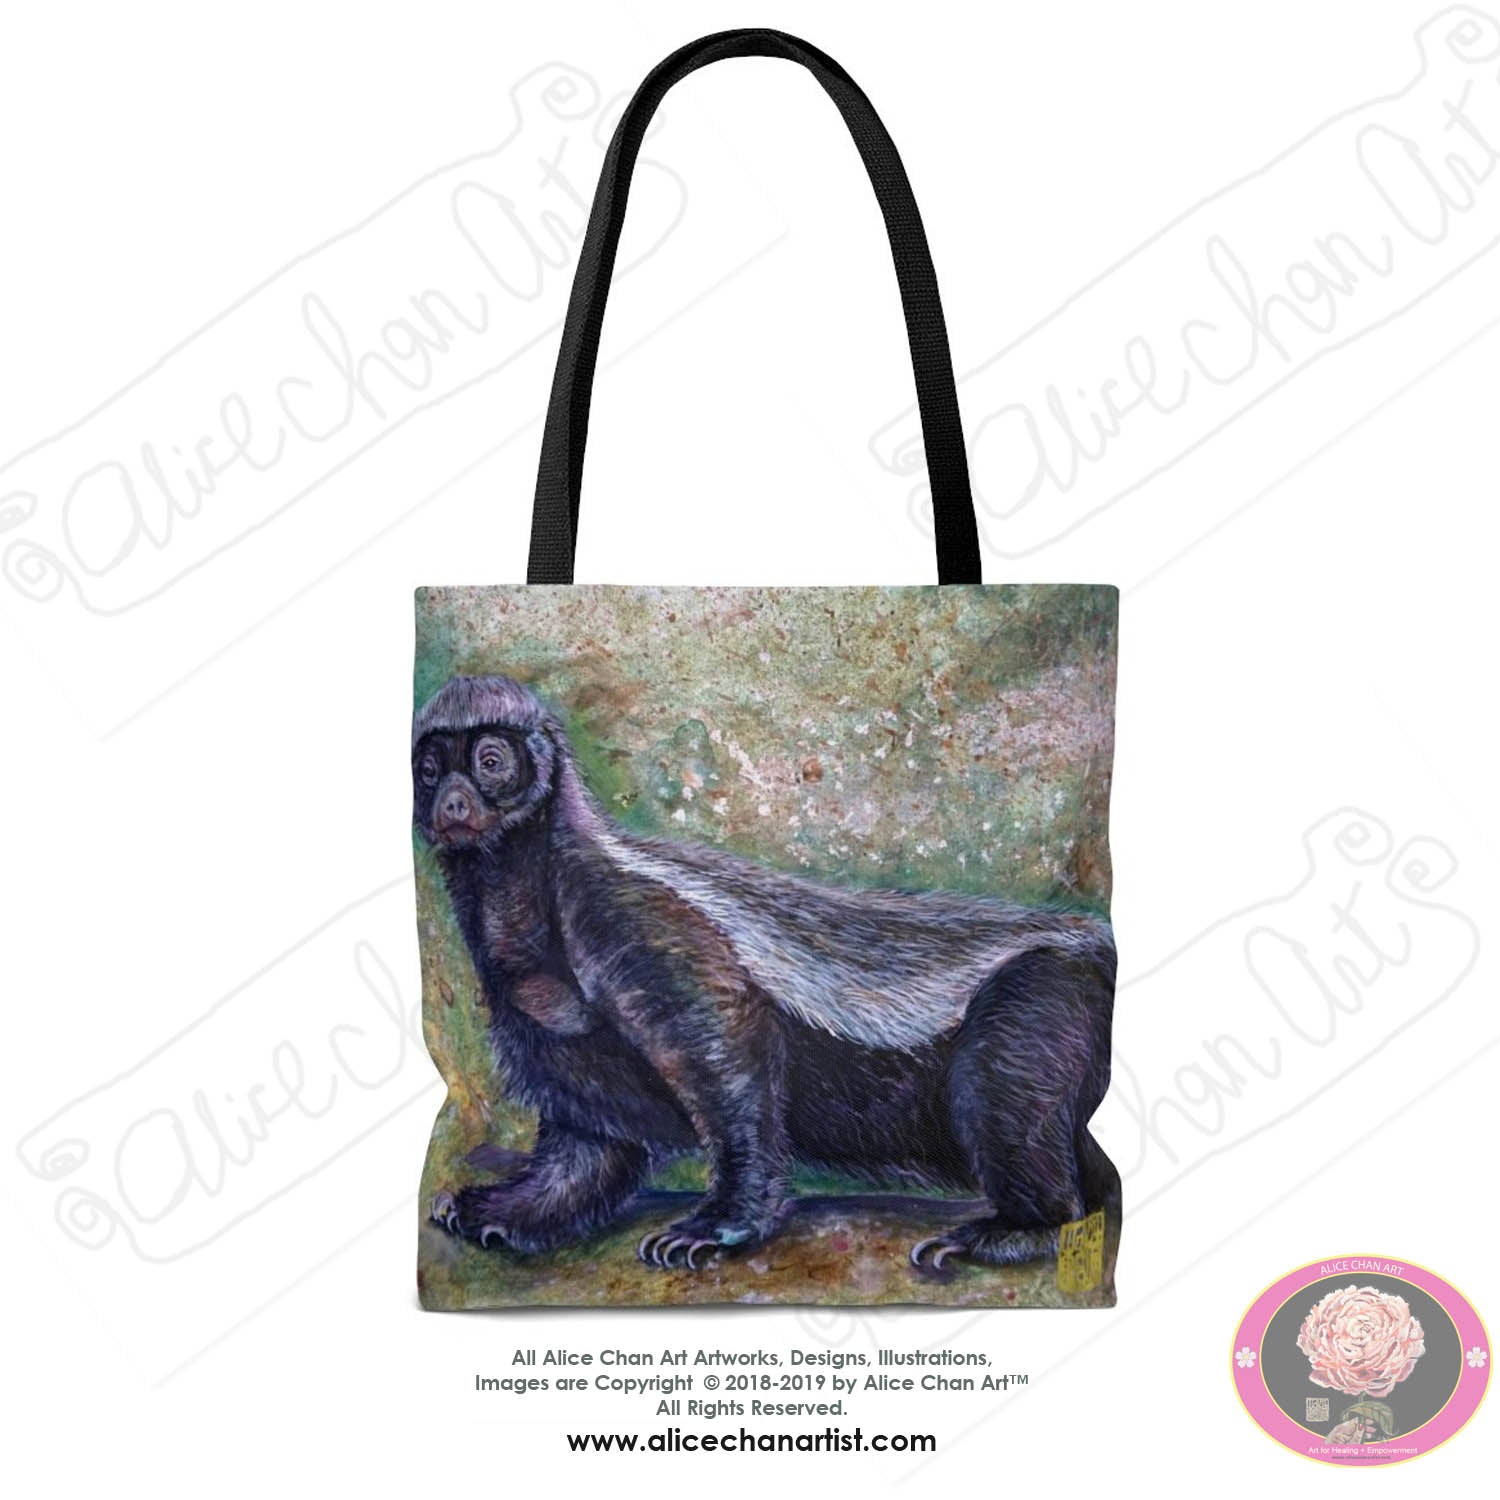 Wildlife Art, Jambo, the Honey Badger, Animal Art Square Tote Bag - Made in USA - alicechanart